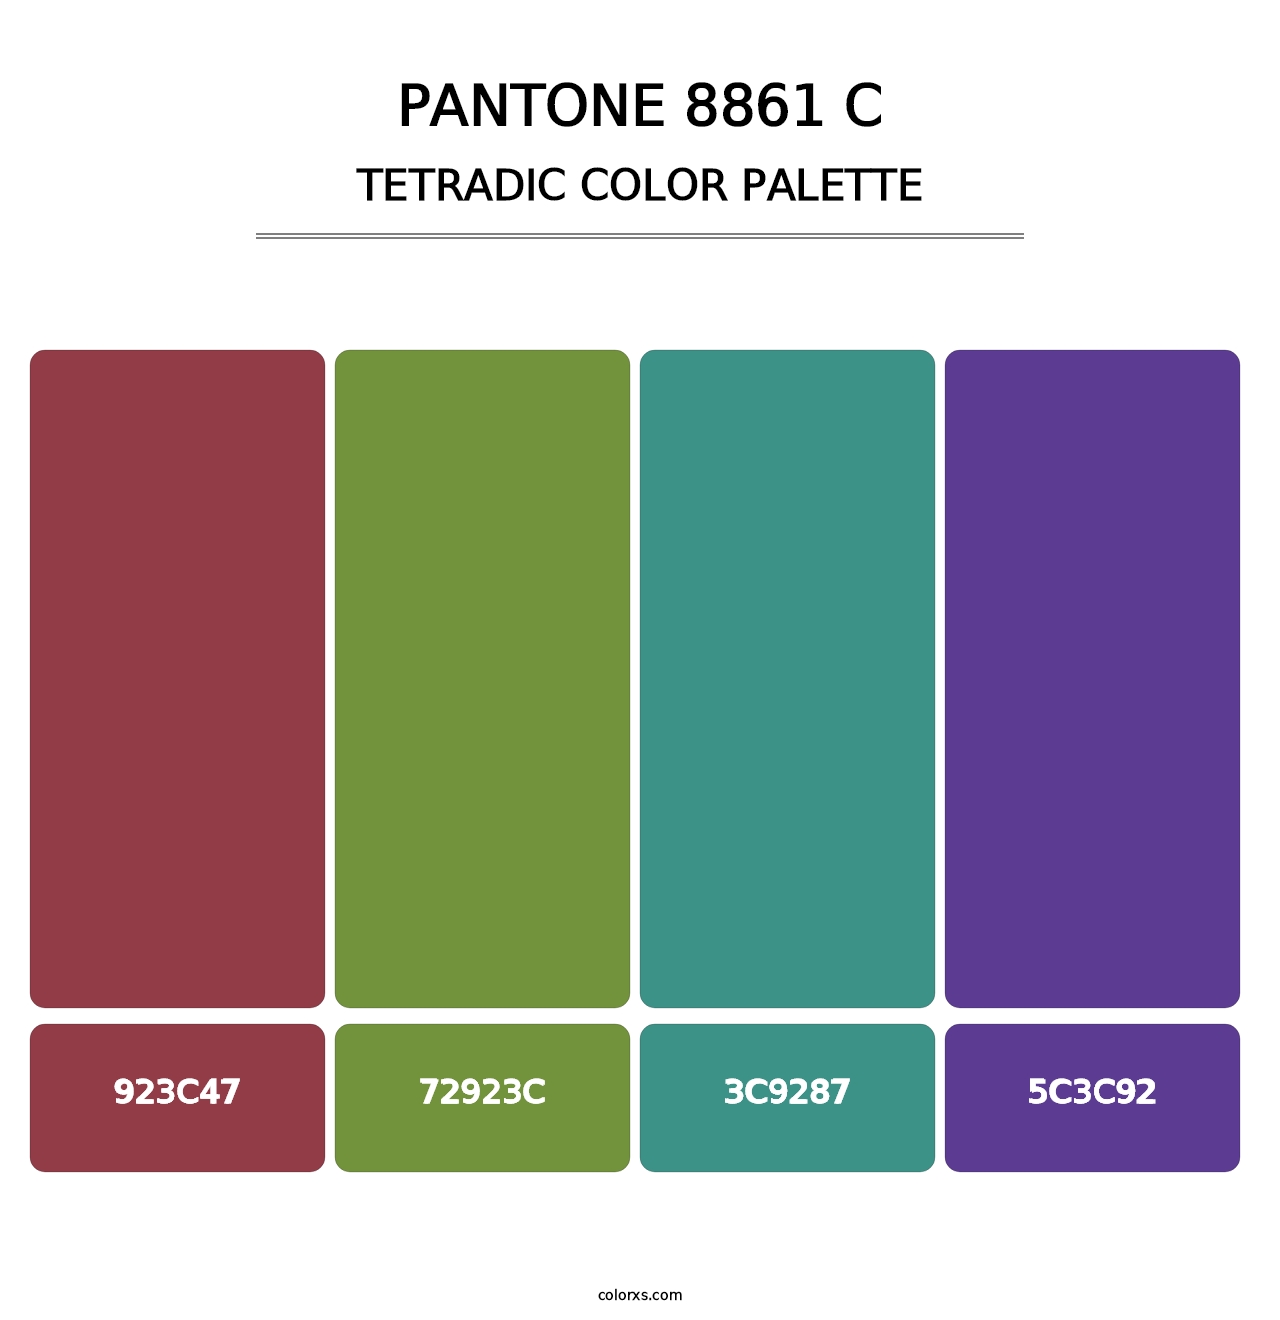 PANTONE 8861 C - Tetradic Color Palette